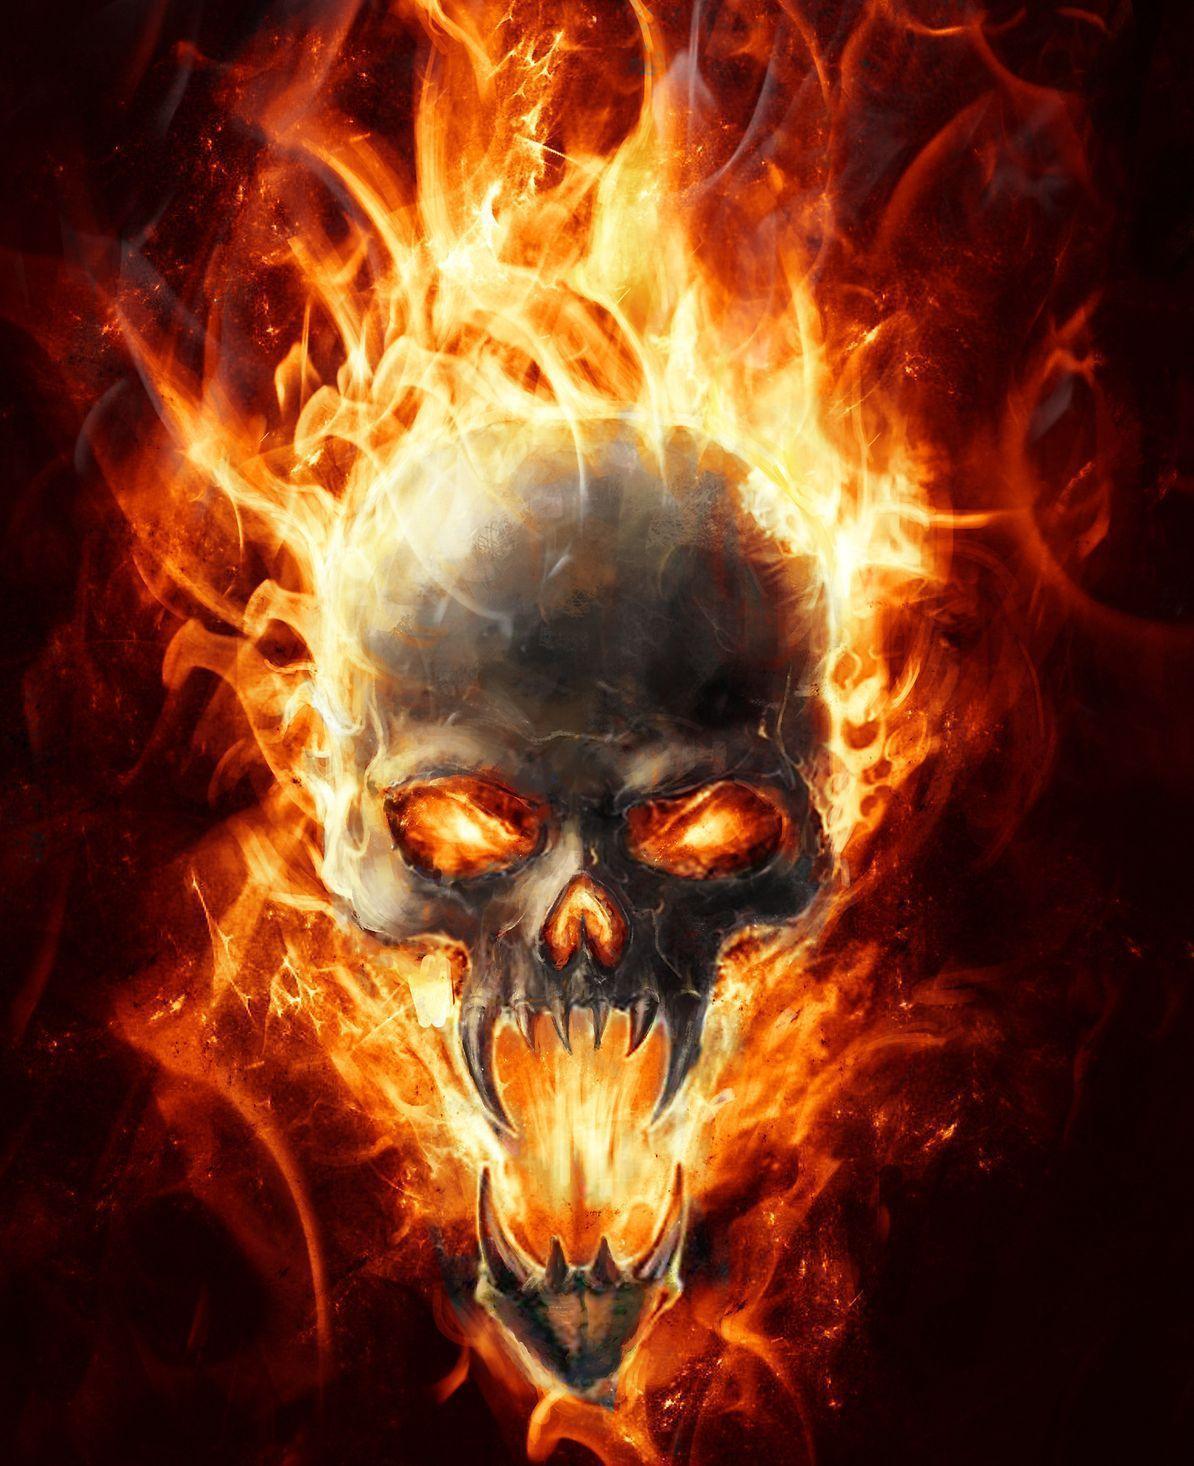 skulls with flames wallpaper